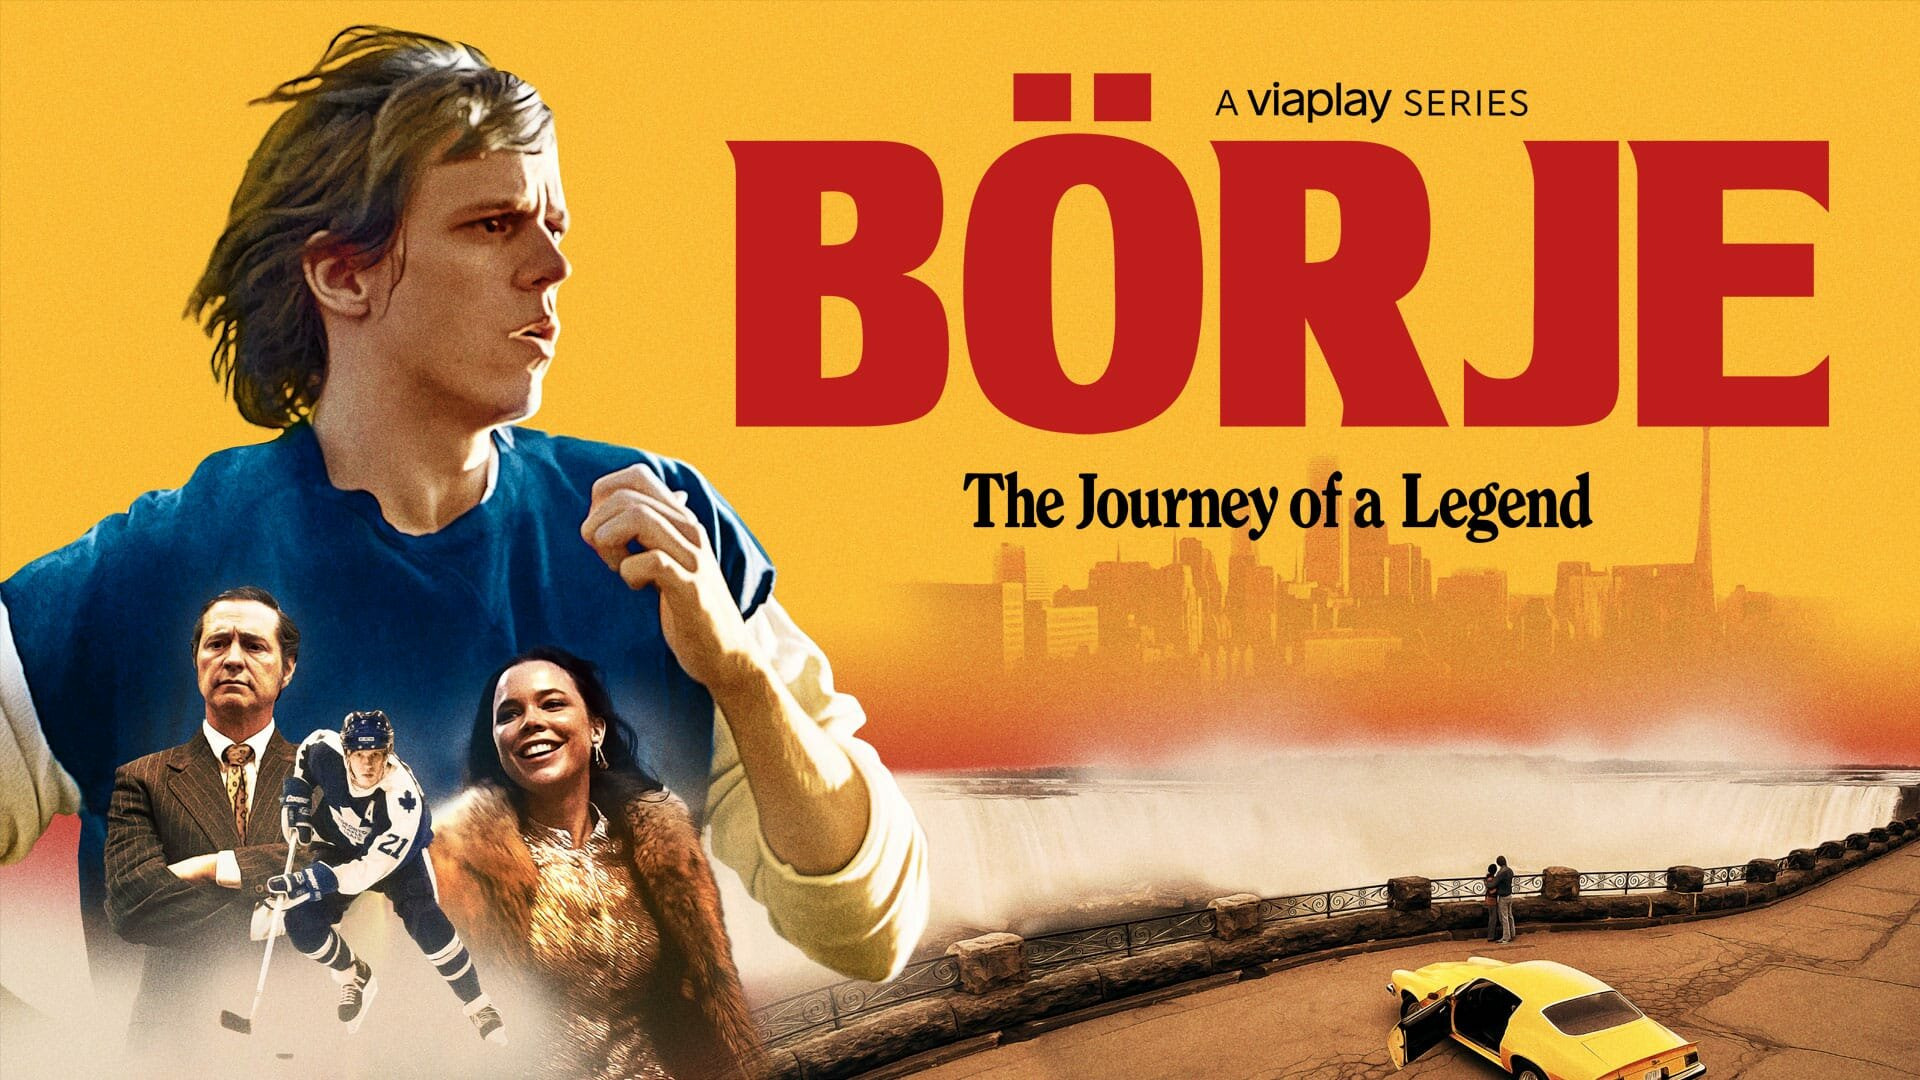 Show Börje - The Journey of a Legend